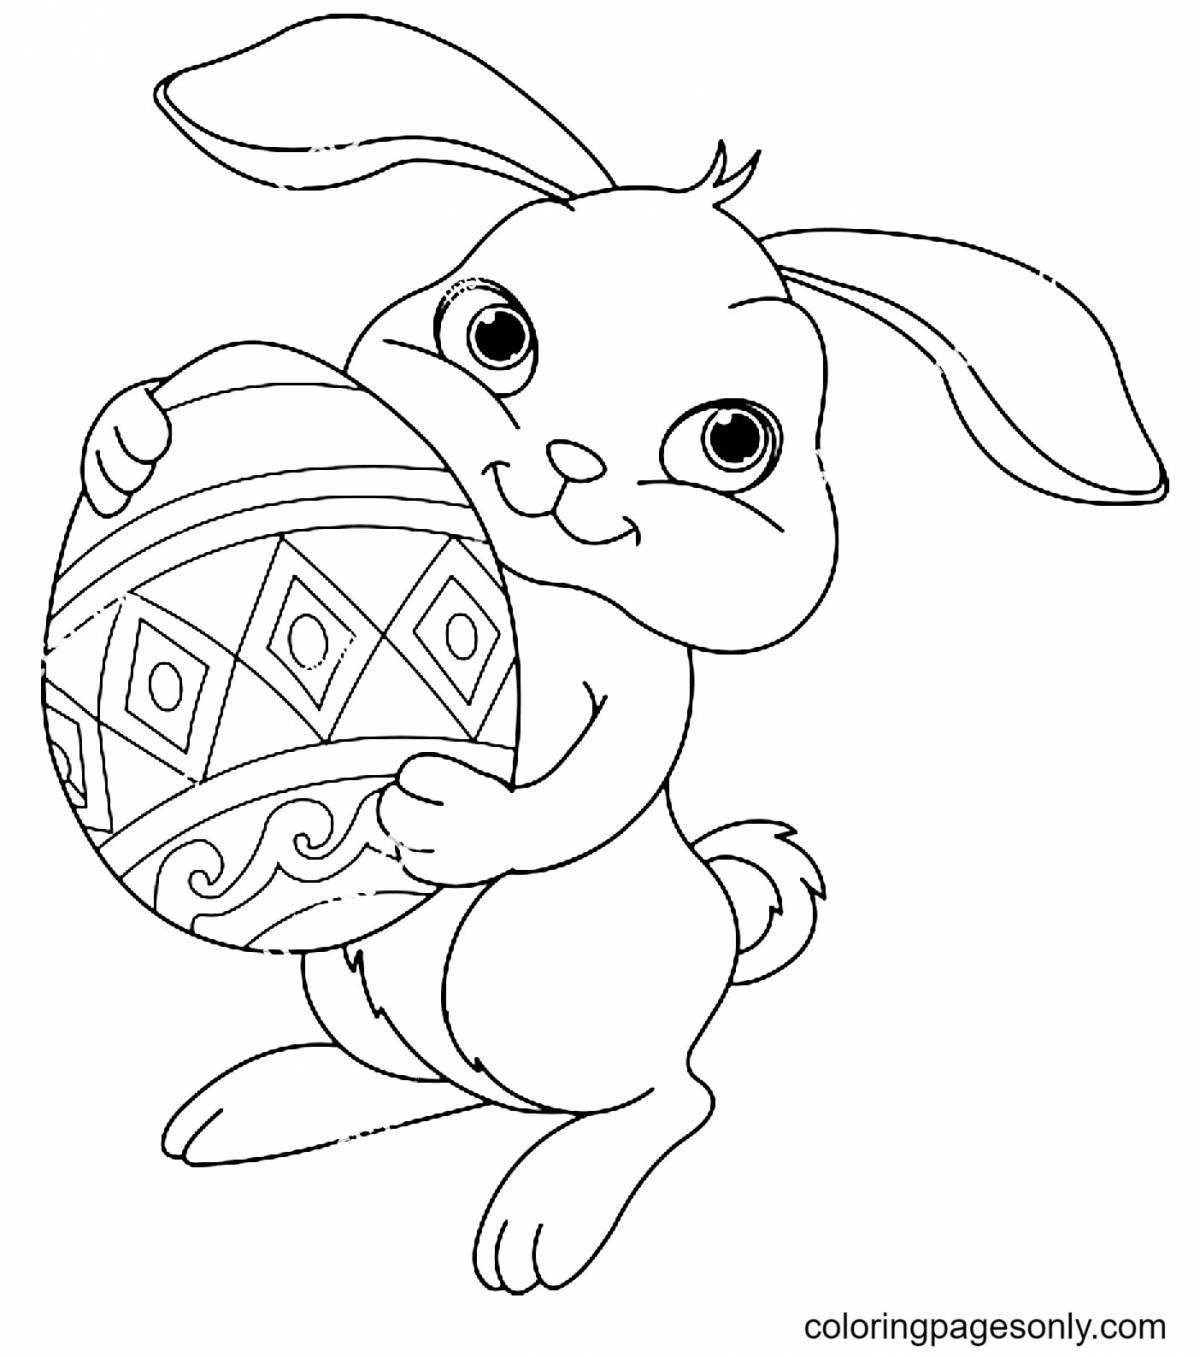 Fun coloring book for rabbits